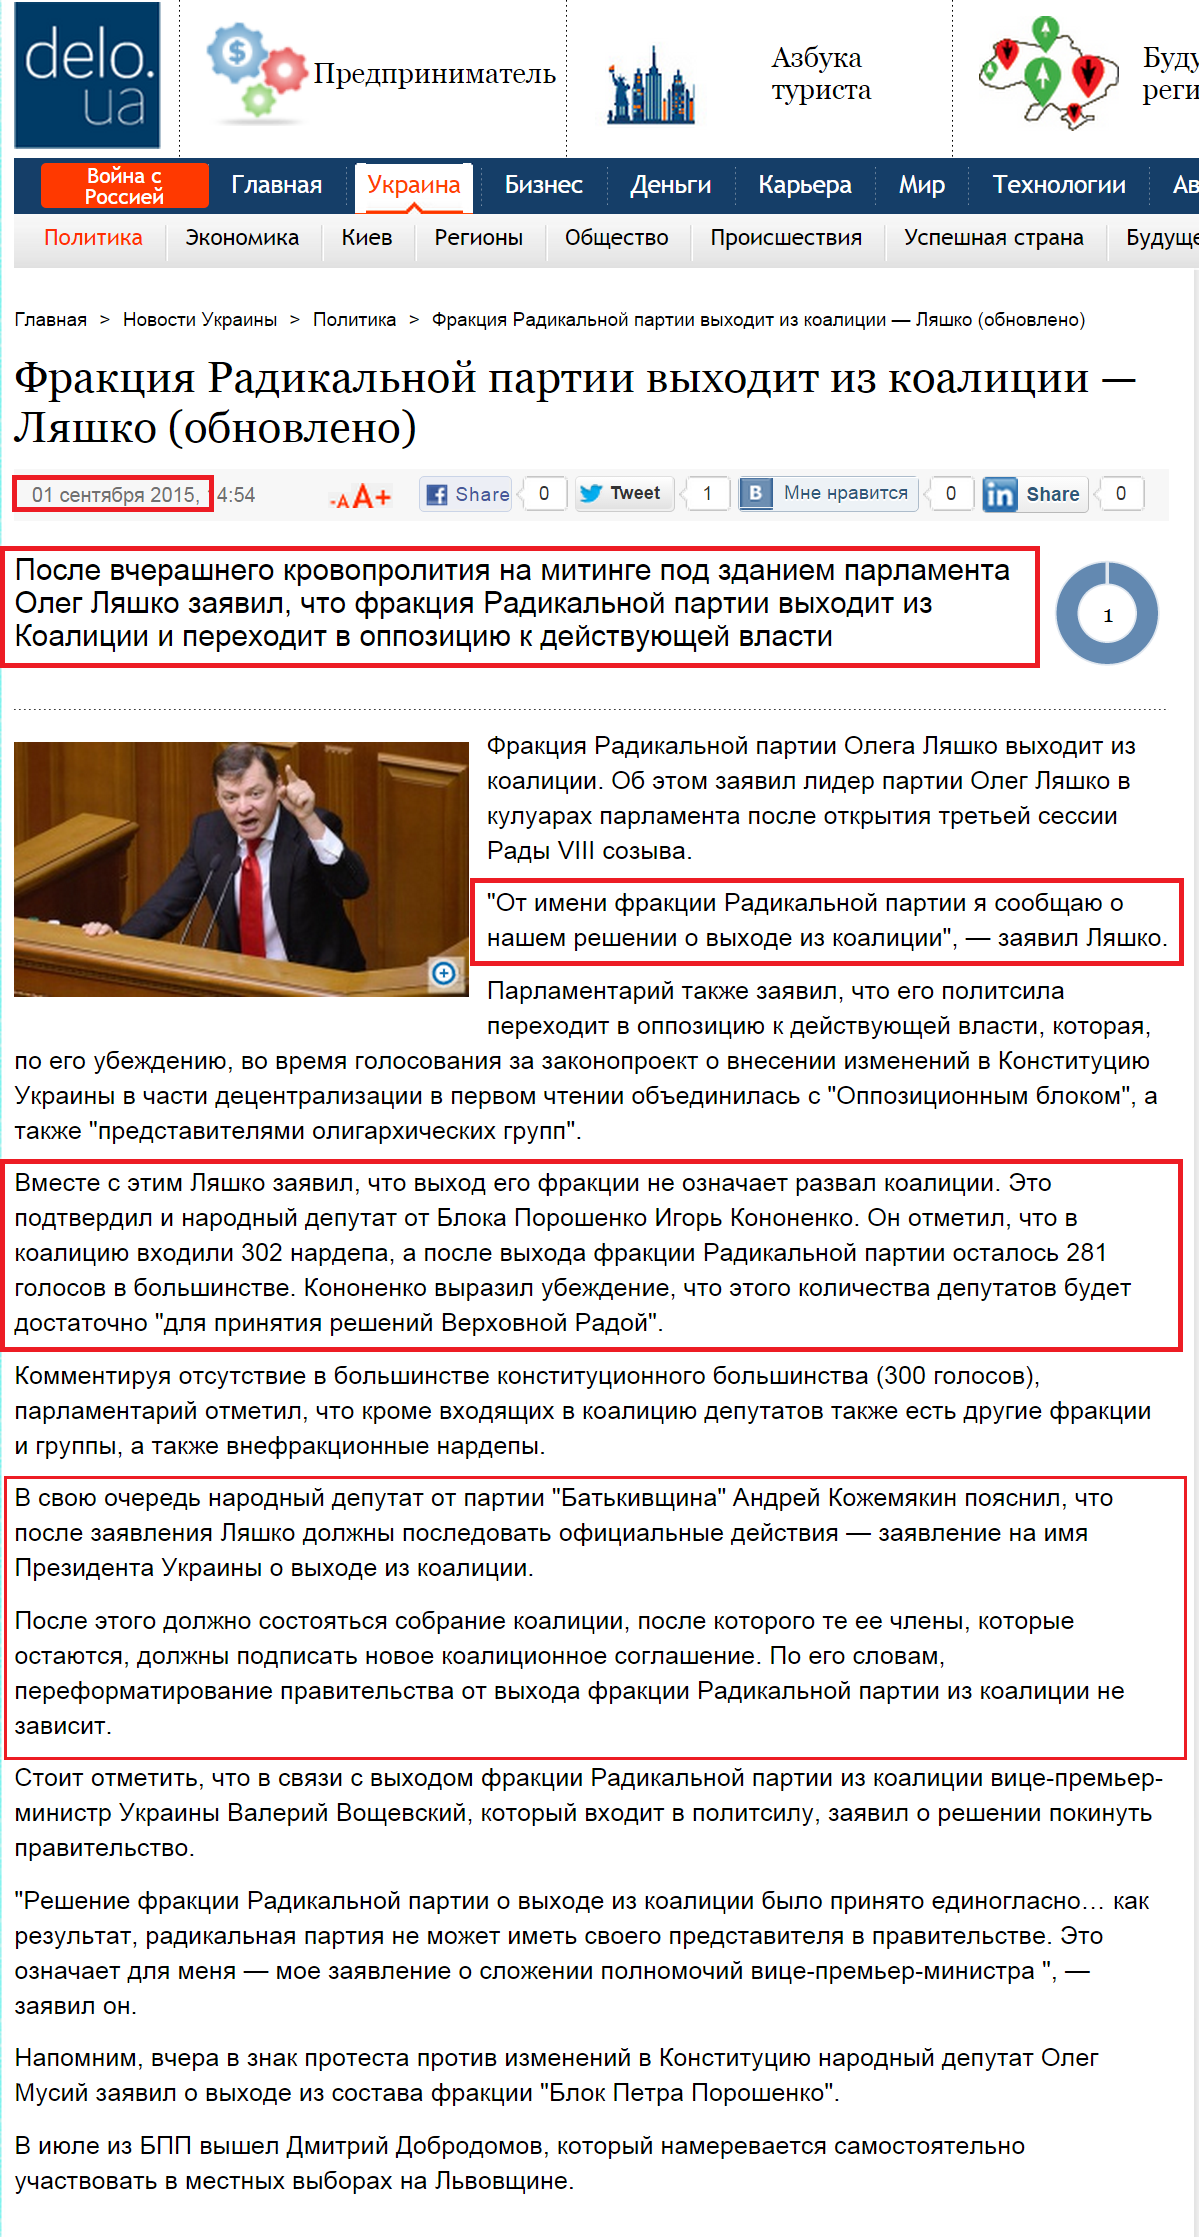 http://delo.ua/ukraine/frakcija-radikalnoj-partii-vyhodit-iz-koalicii-ljashko-302984/?supdated_new=1441110265